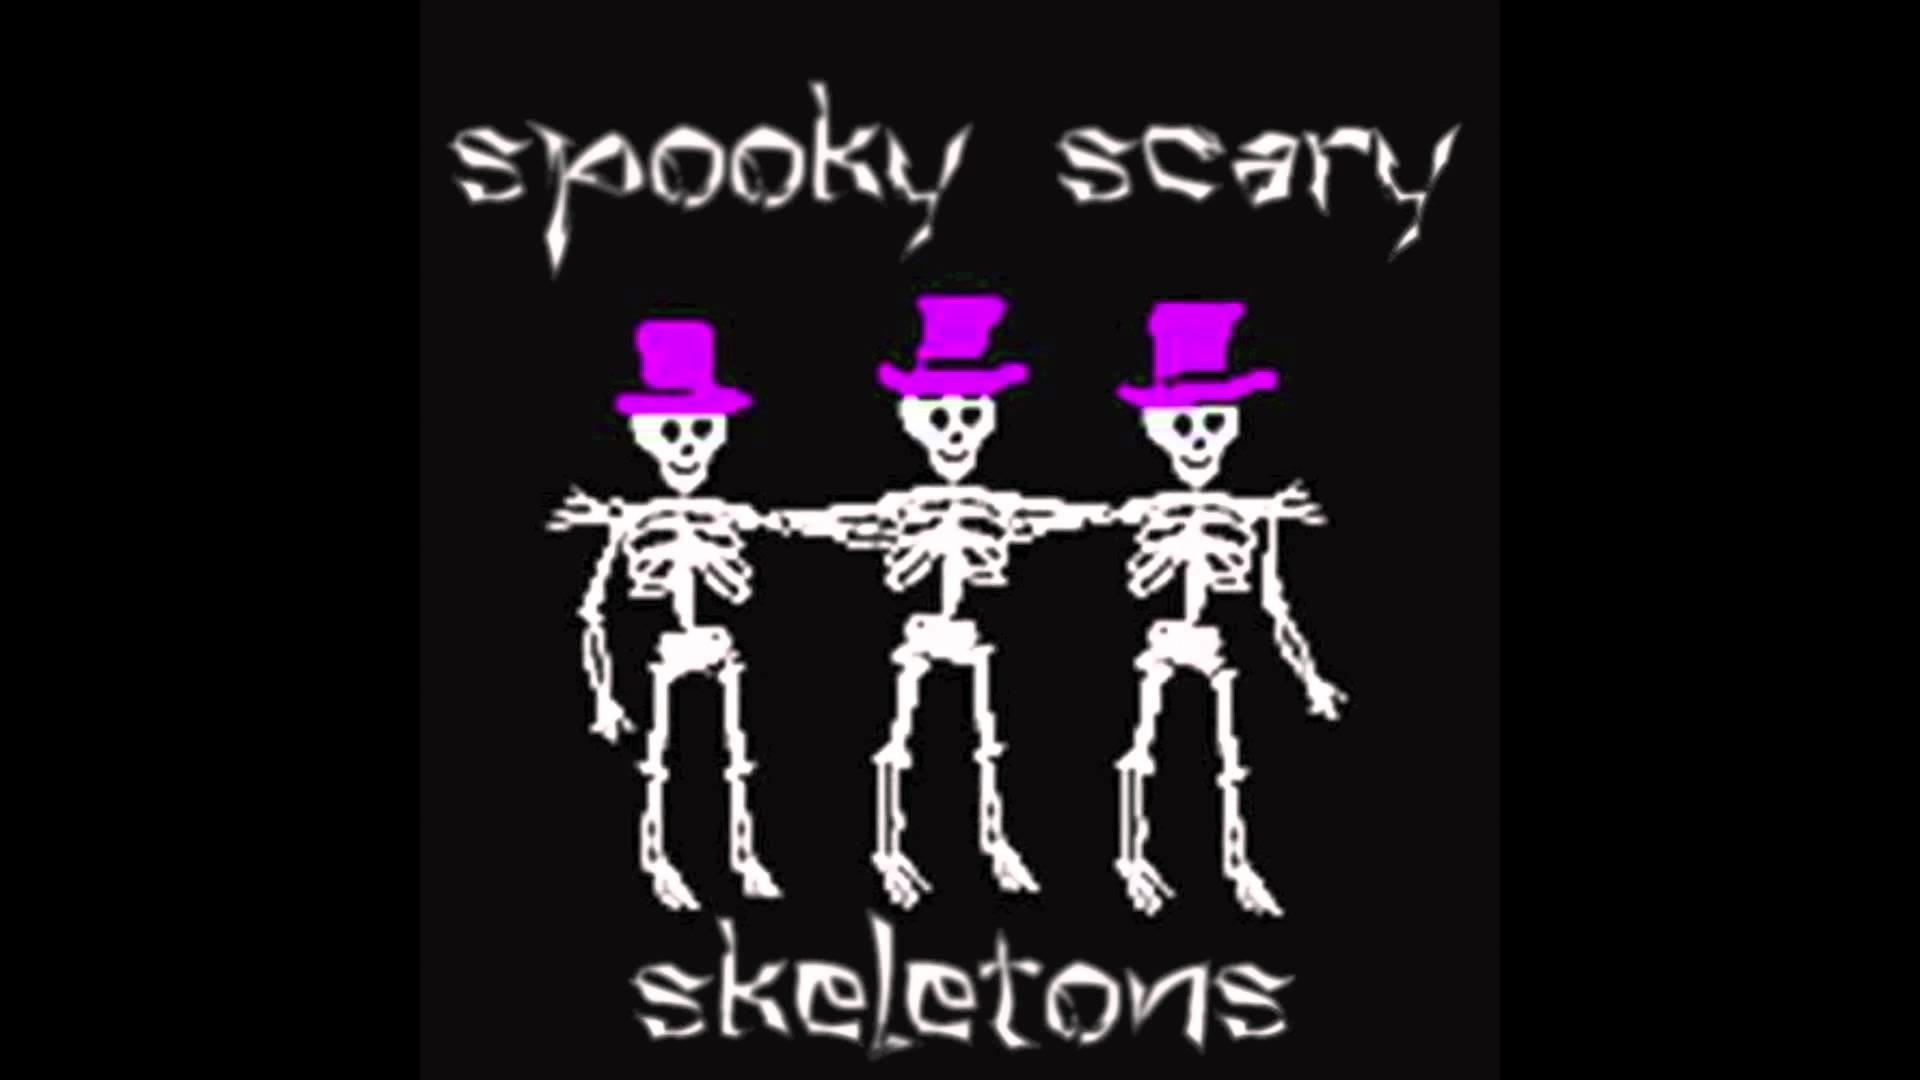 Спуки скери скелетонс. Spooky Scary Skeletons Эндрю Голд. Обои СПУКИ скери скелетон.